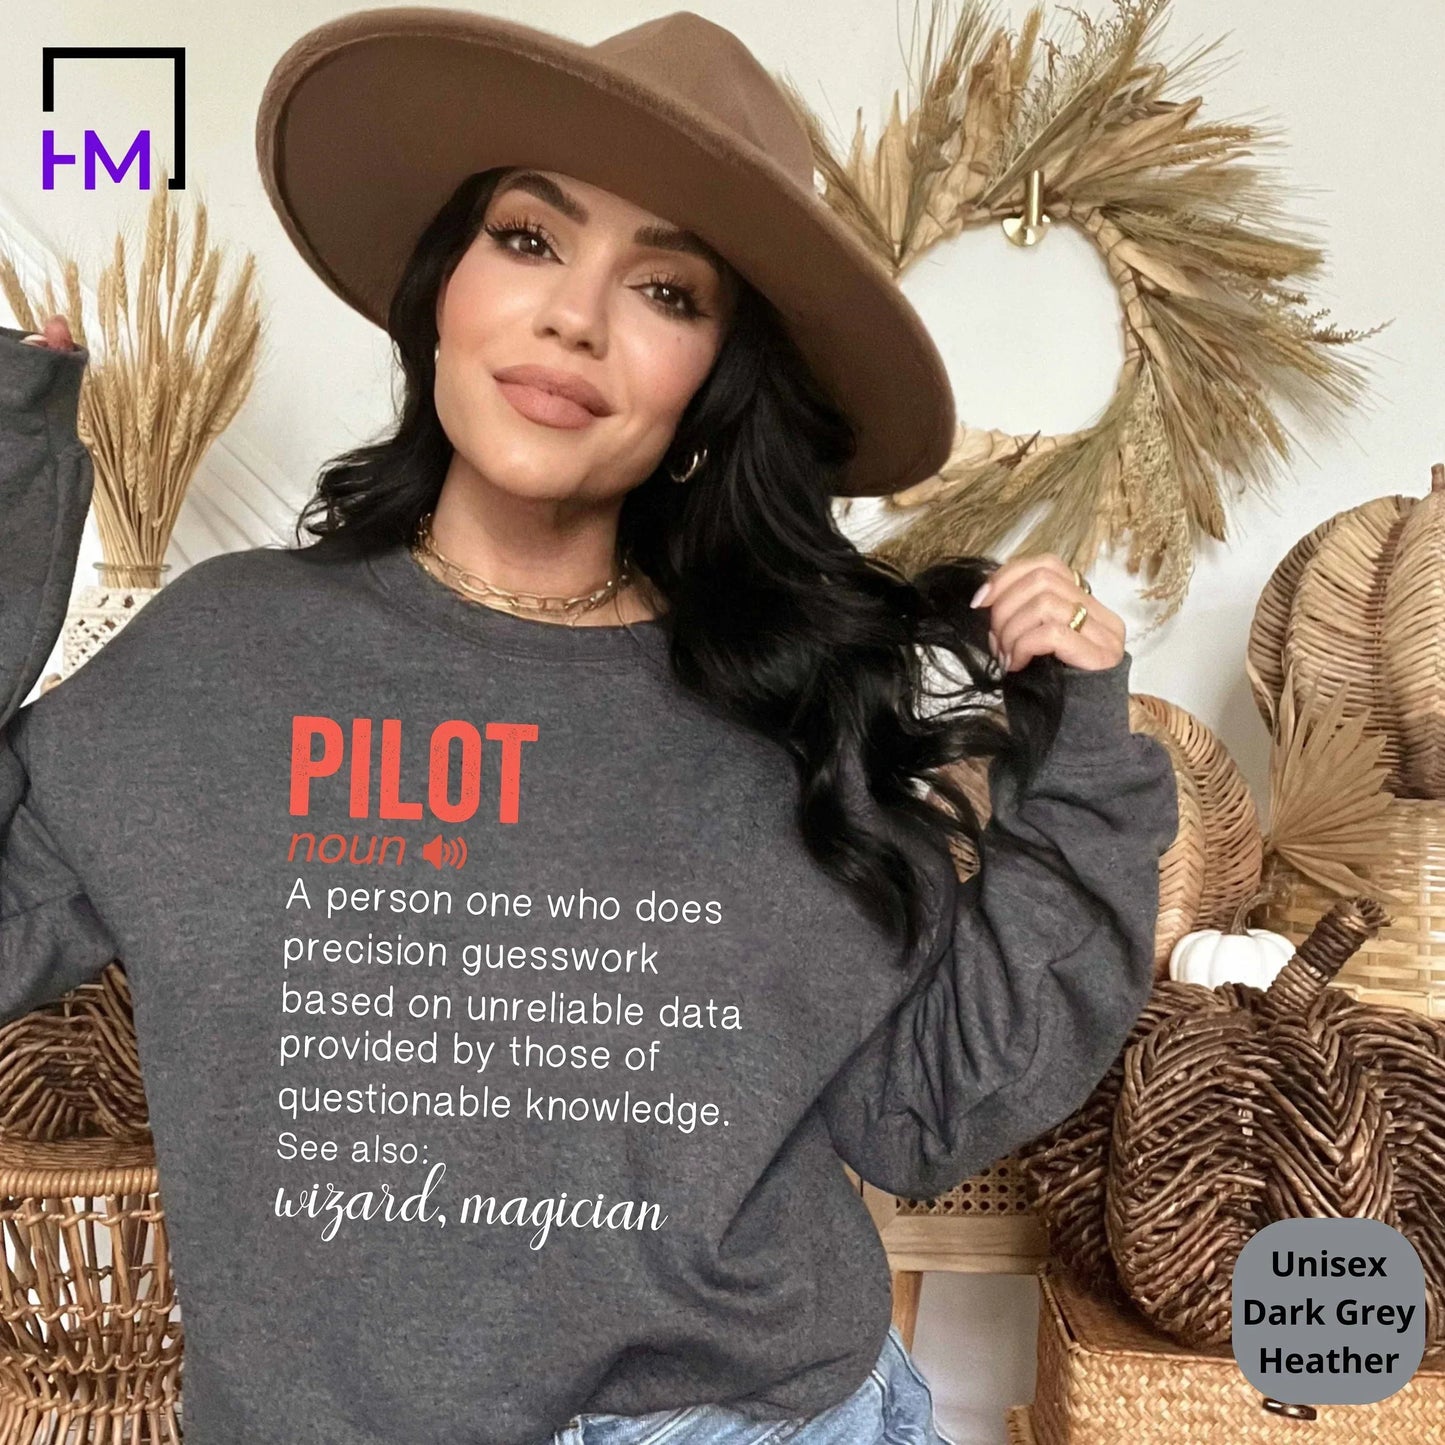 Funny Pilot Shirt, Airplane Mode Shirt, Aviation Graduate Student, Pilot Gift for Traveler, Adventurer Gift, Frequent Flyer Vacation Tee